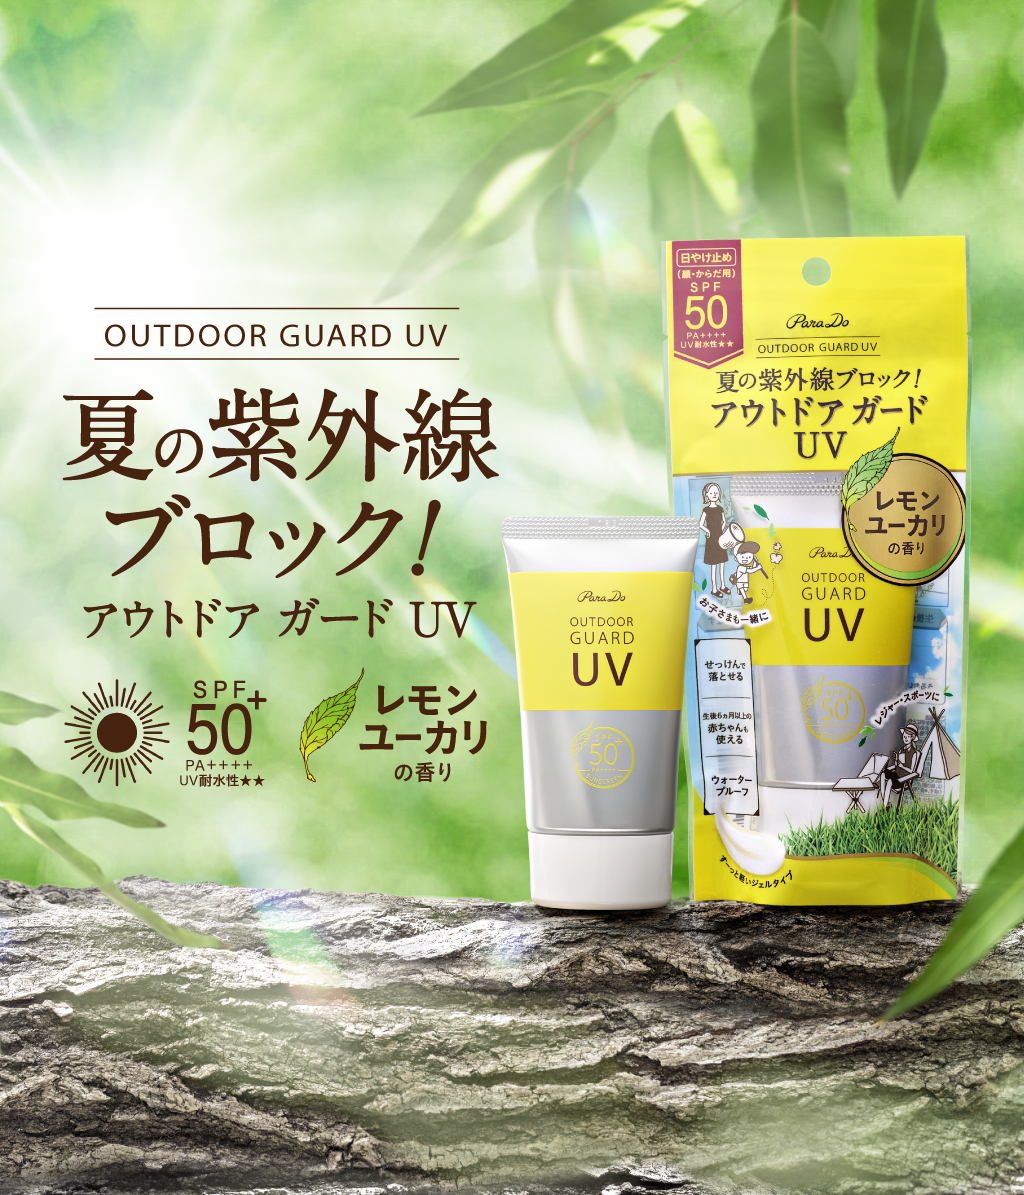 OUTDOOR GUARD UV 夏の紫外線 ブロック！ SPF50+ PA++++ UV耐水性★★レモンユーカリの香り